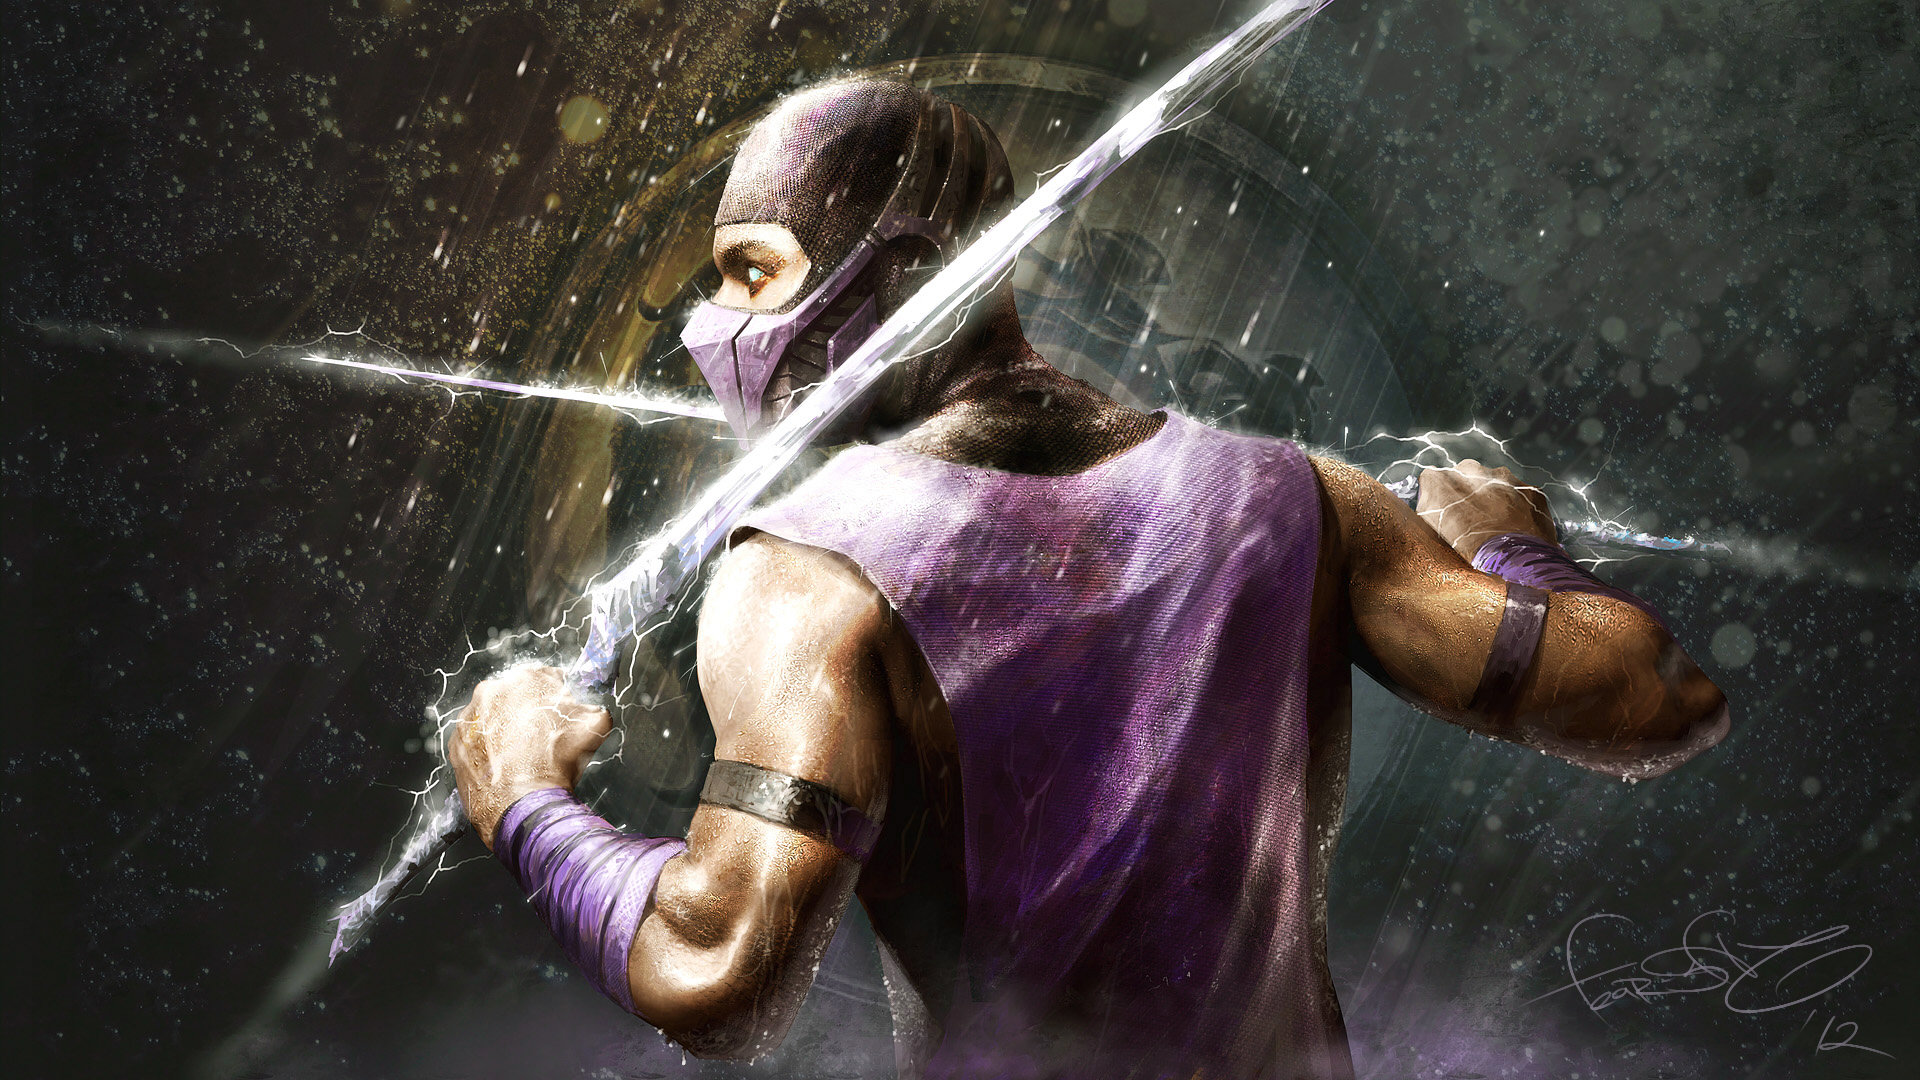 Download full hd 1080p Mortal Kombat desktop background ID:183129 for free